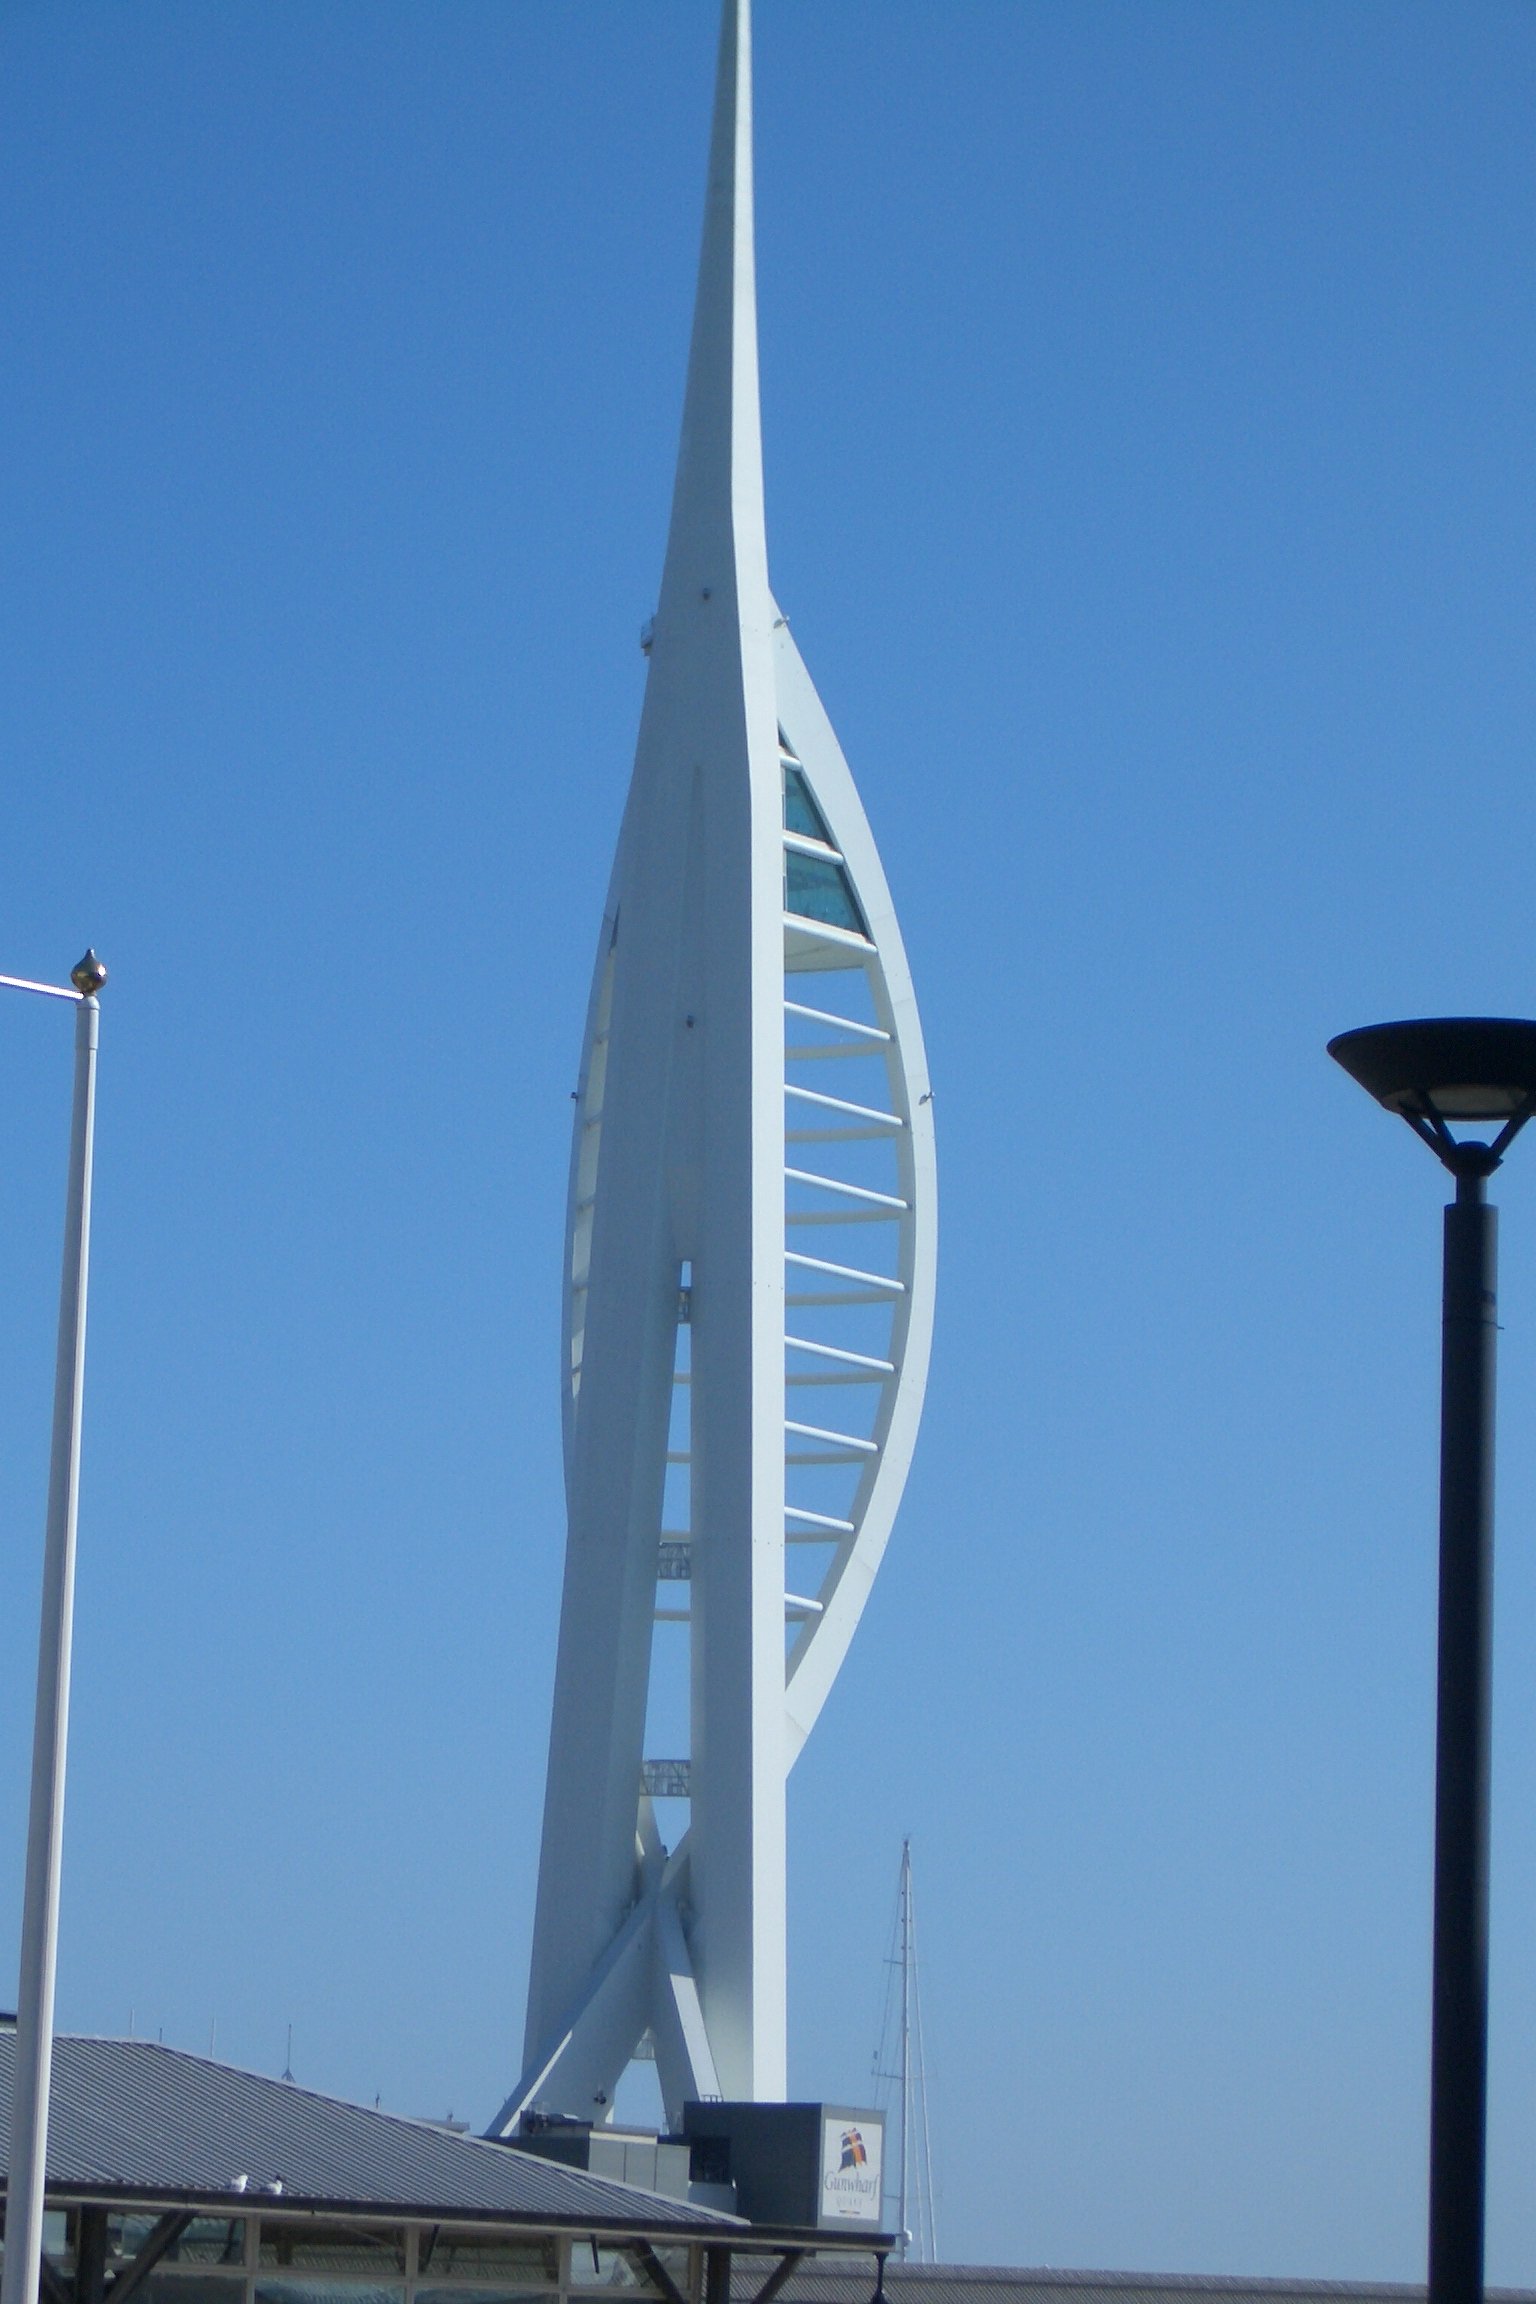 Portsmouth spinnaker tower